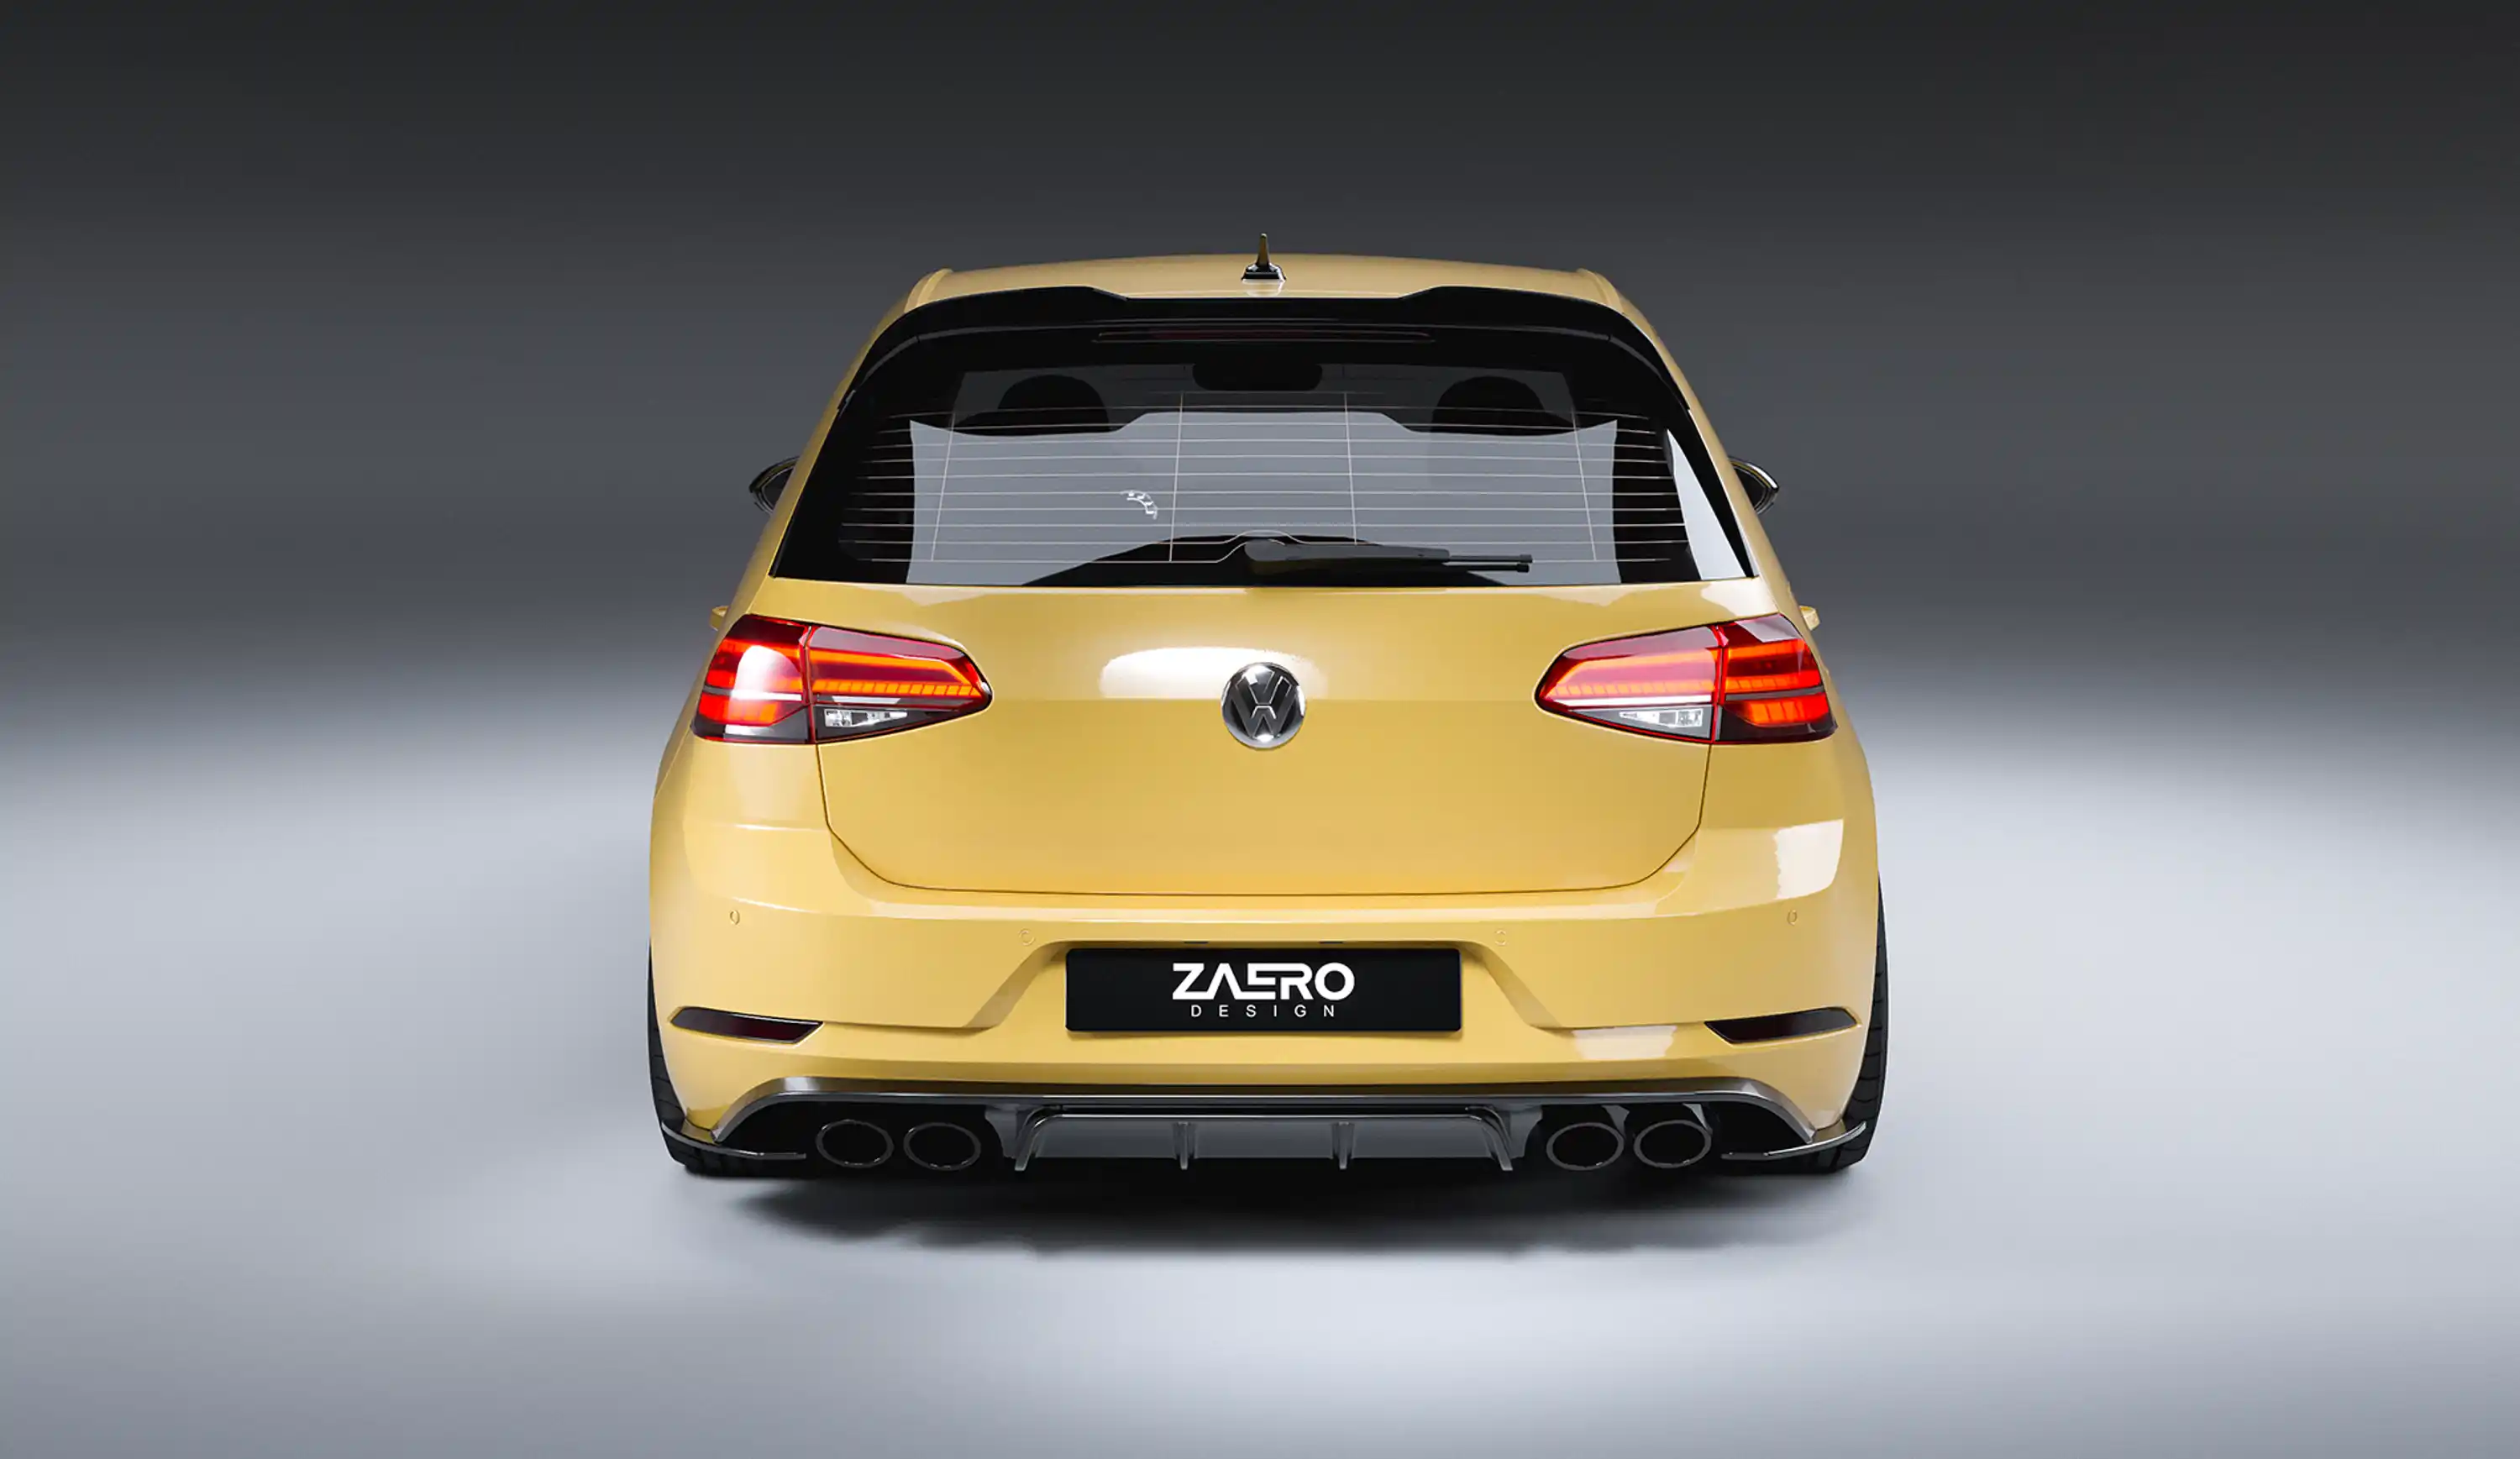 ZAERO DESIGN Body Kits for Volkswagen Golf Models